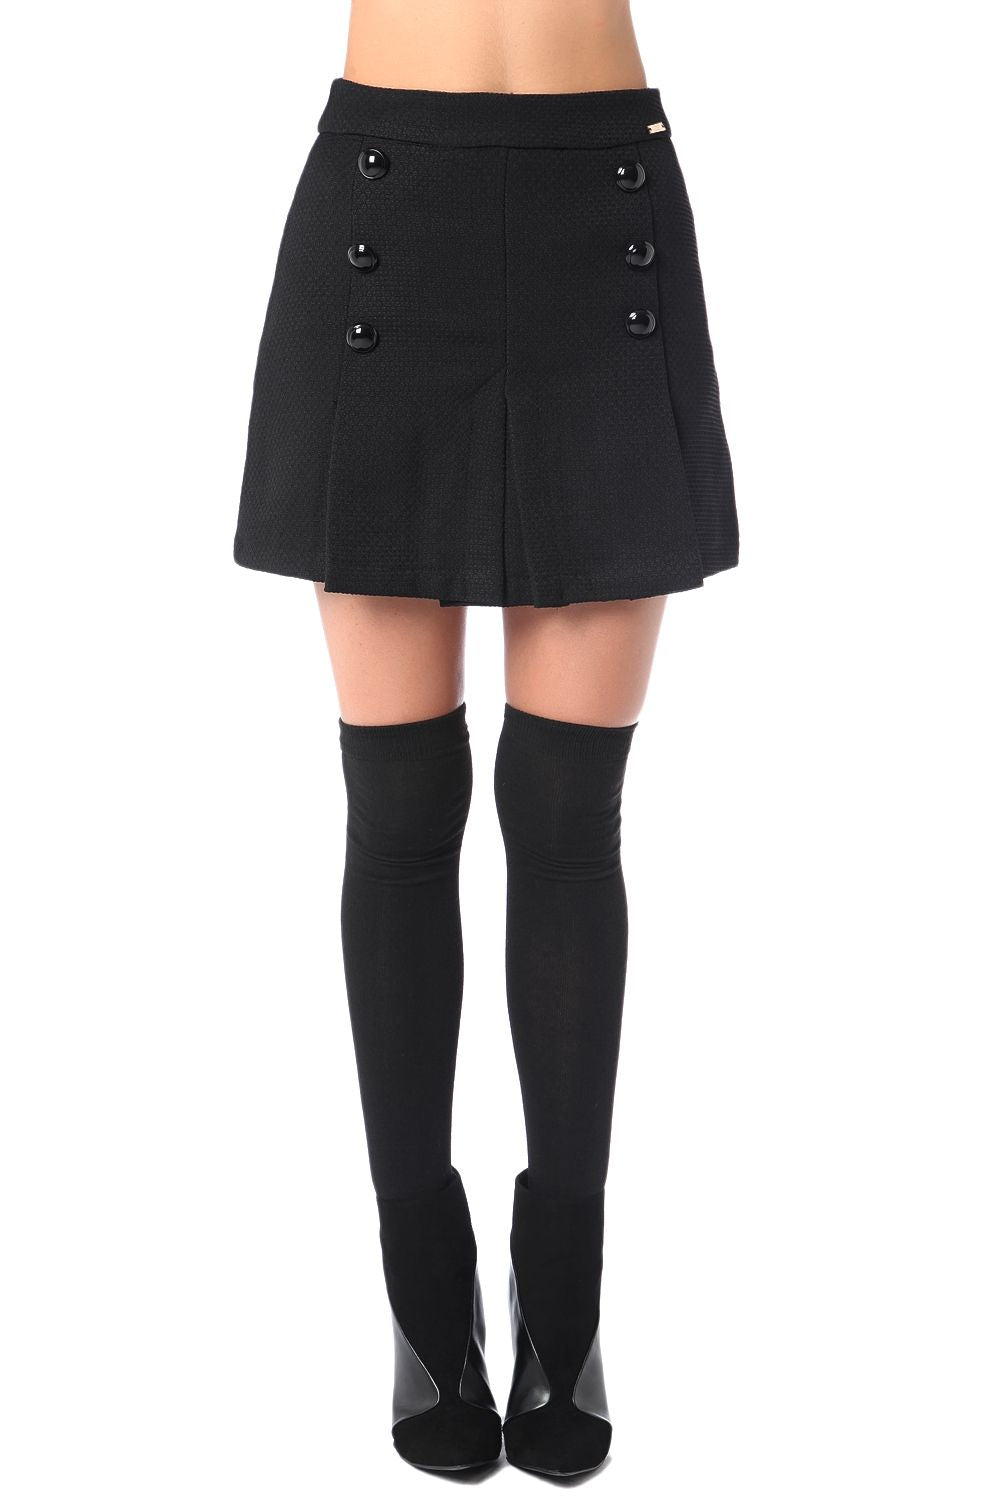 Black mini skirt with black button detail